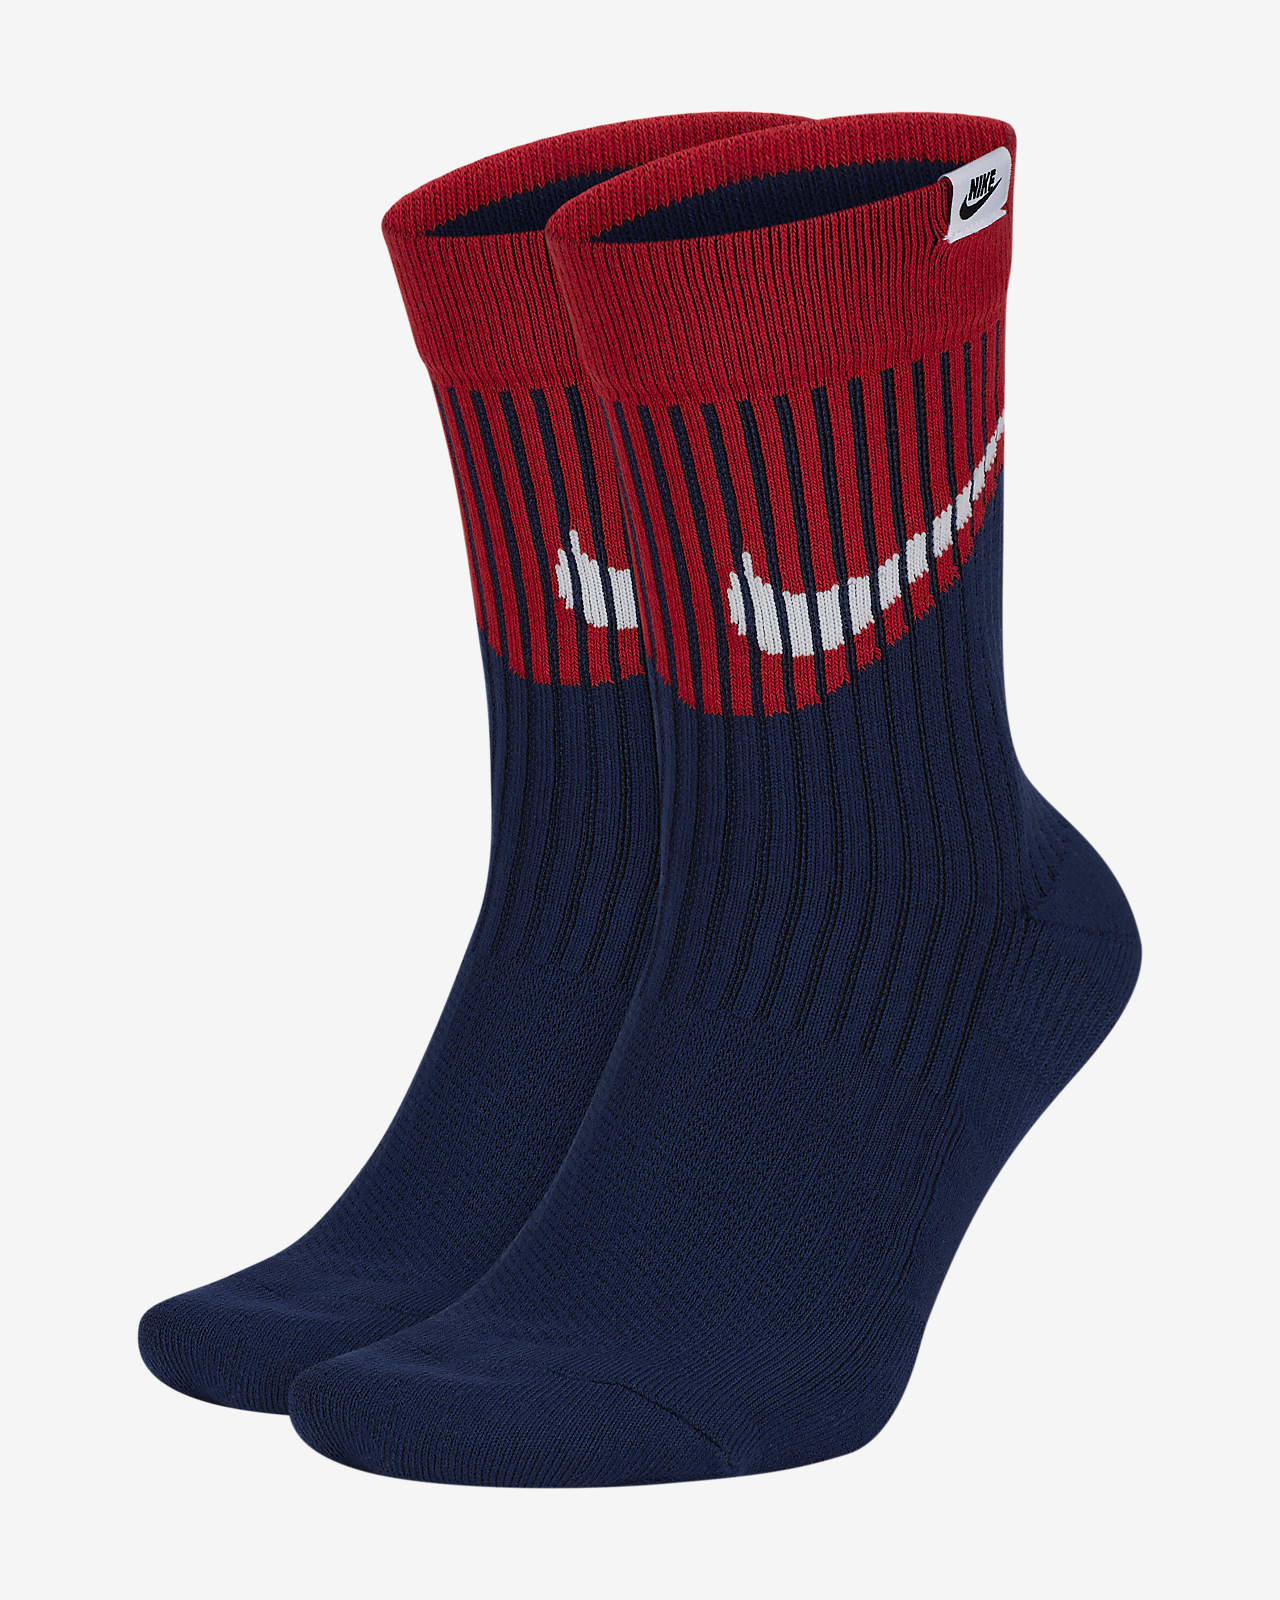 nike socks with red swoosh